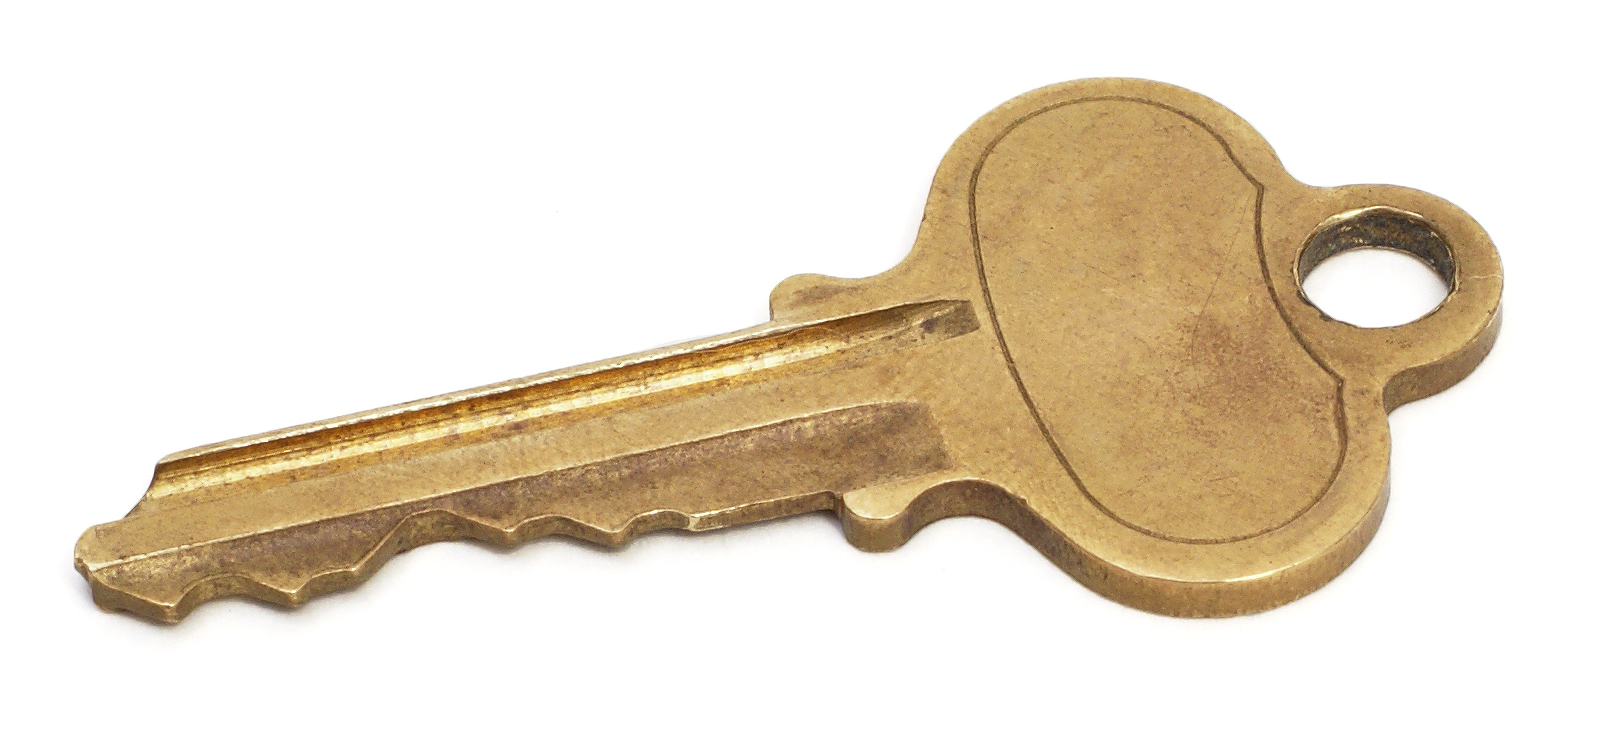 Standard-lock-key.jpg